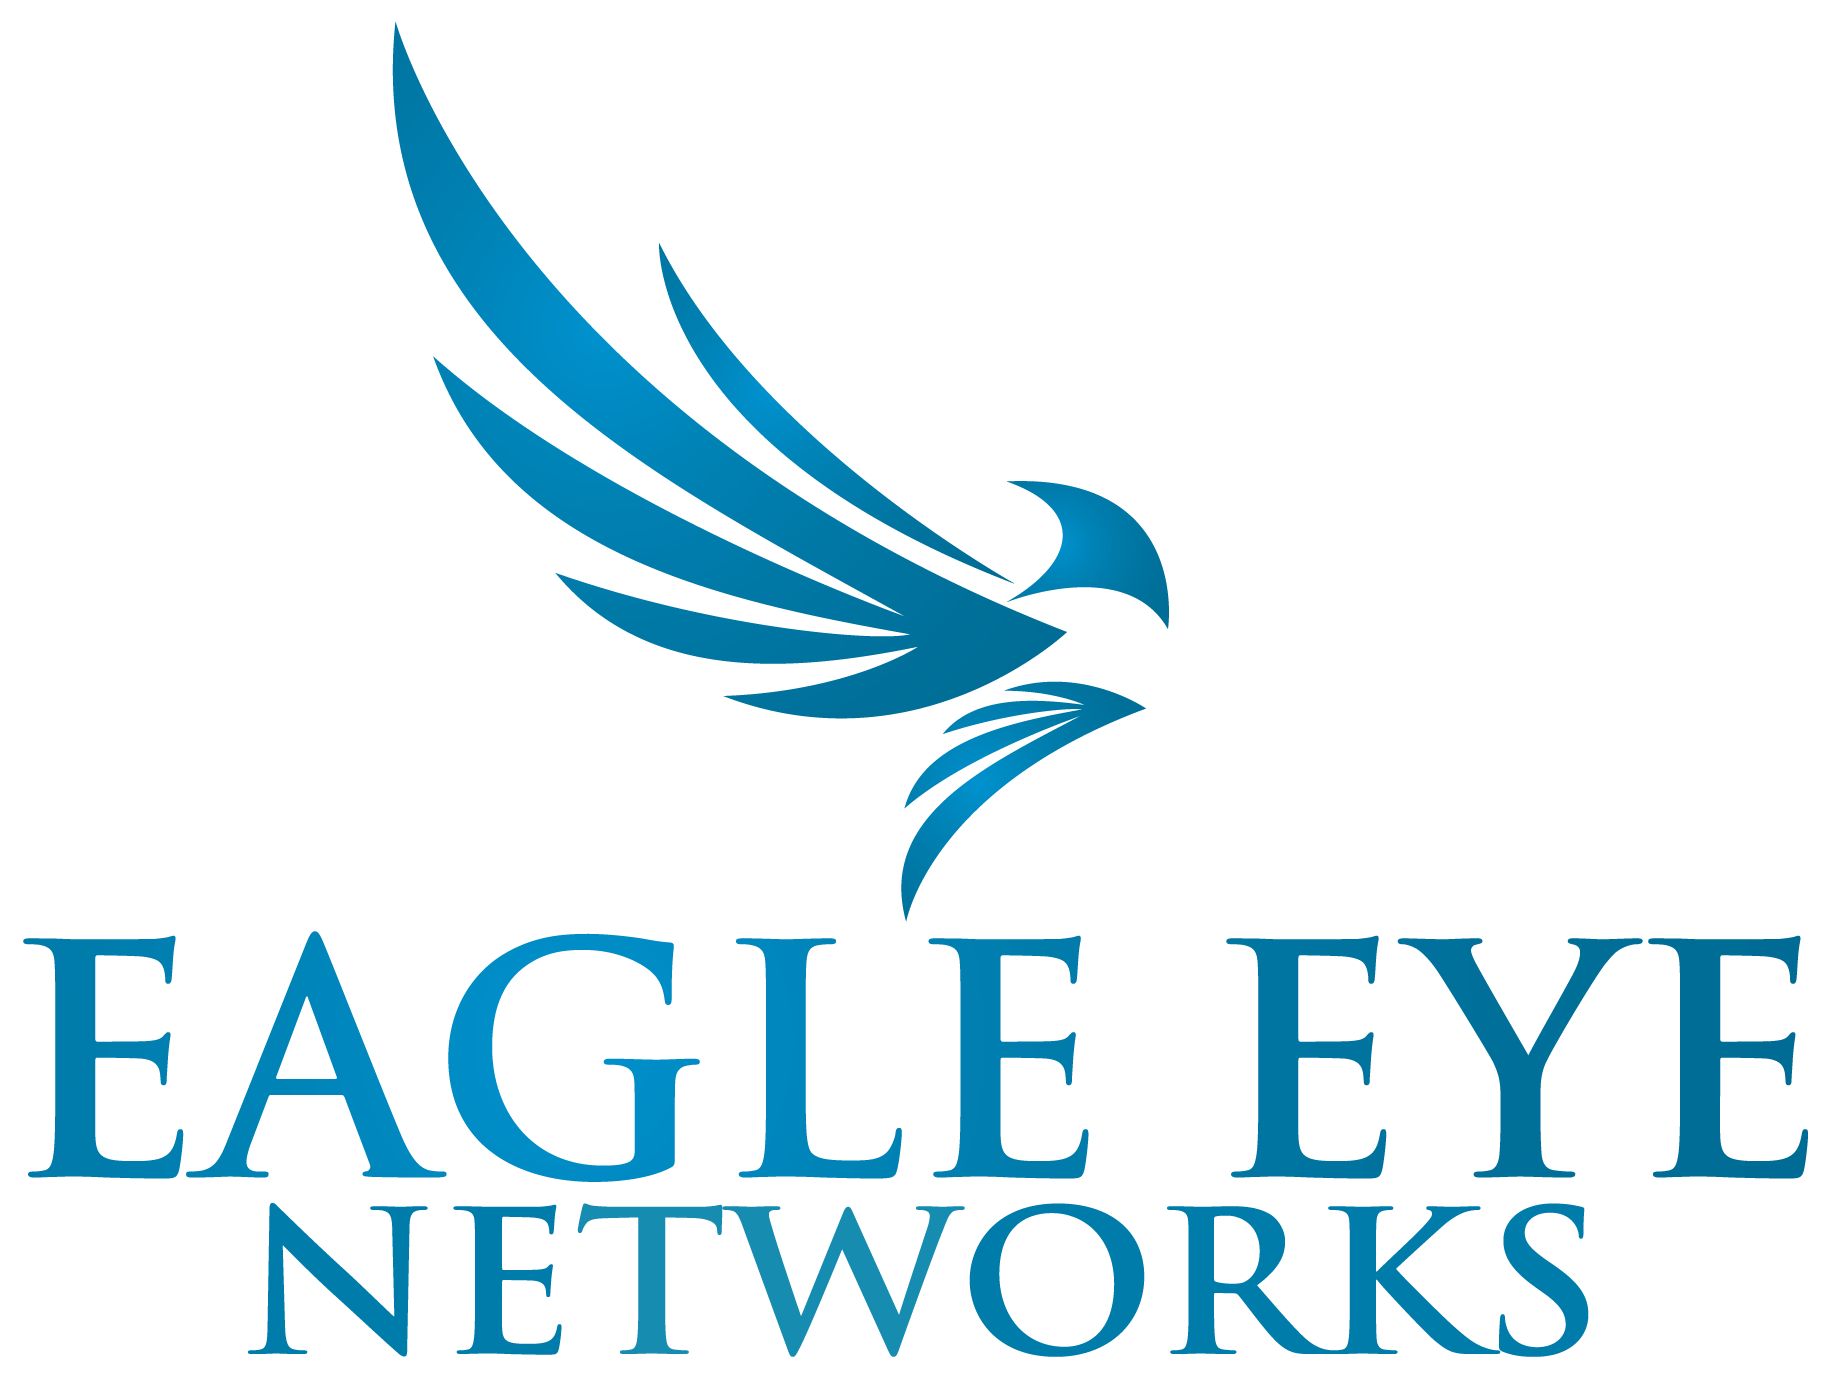 Eagle Eye Networks Cloud Video Surveillance Authorized Partner Logo